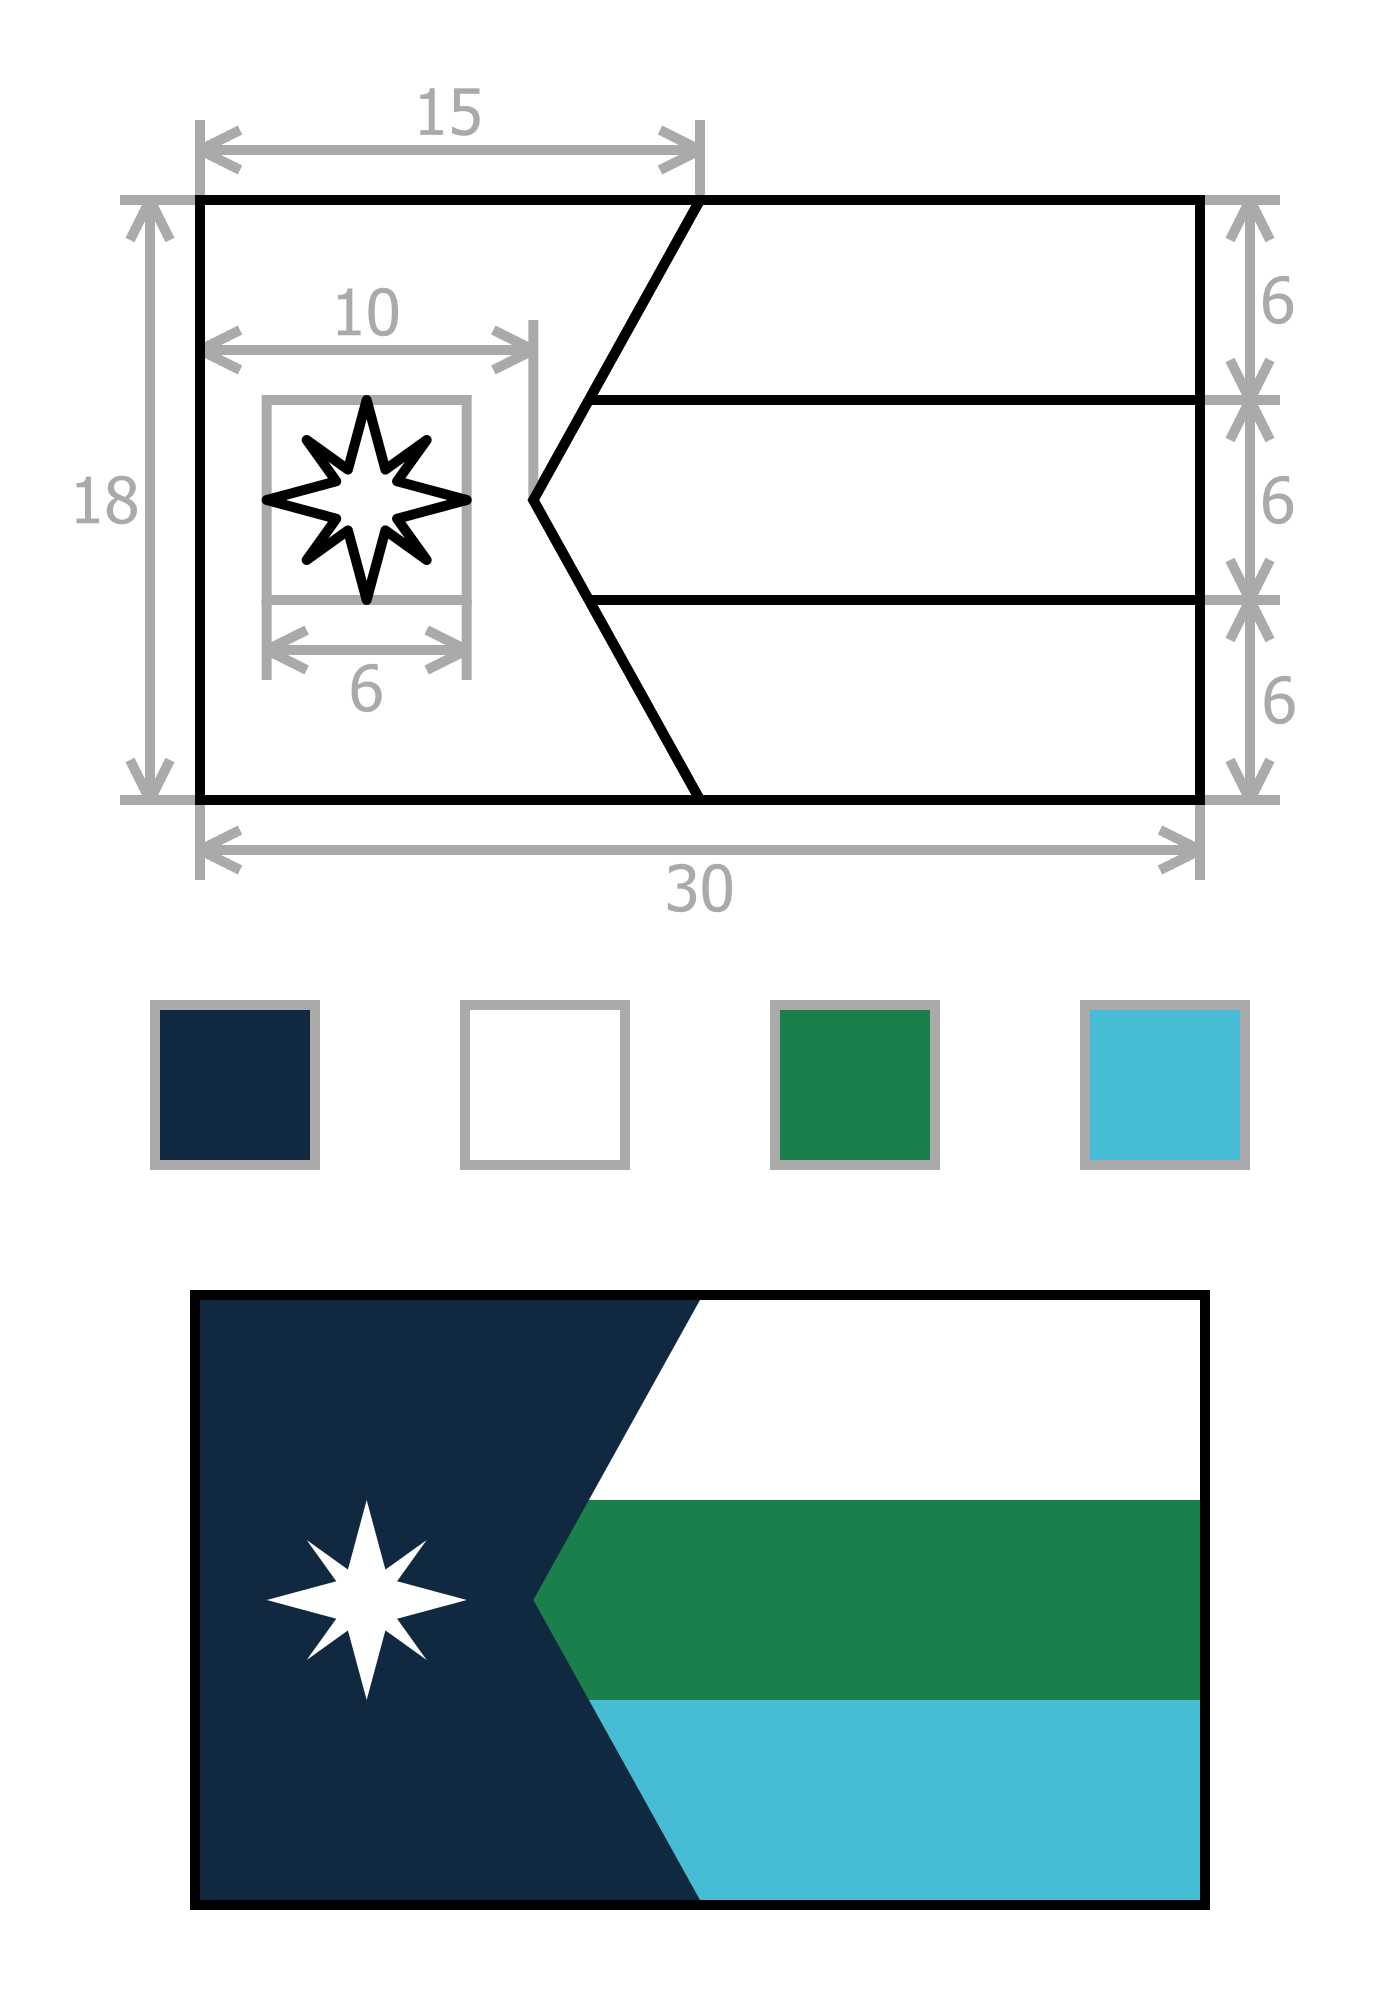 I slightly modified f minnesota flag proposal rvexillology